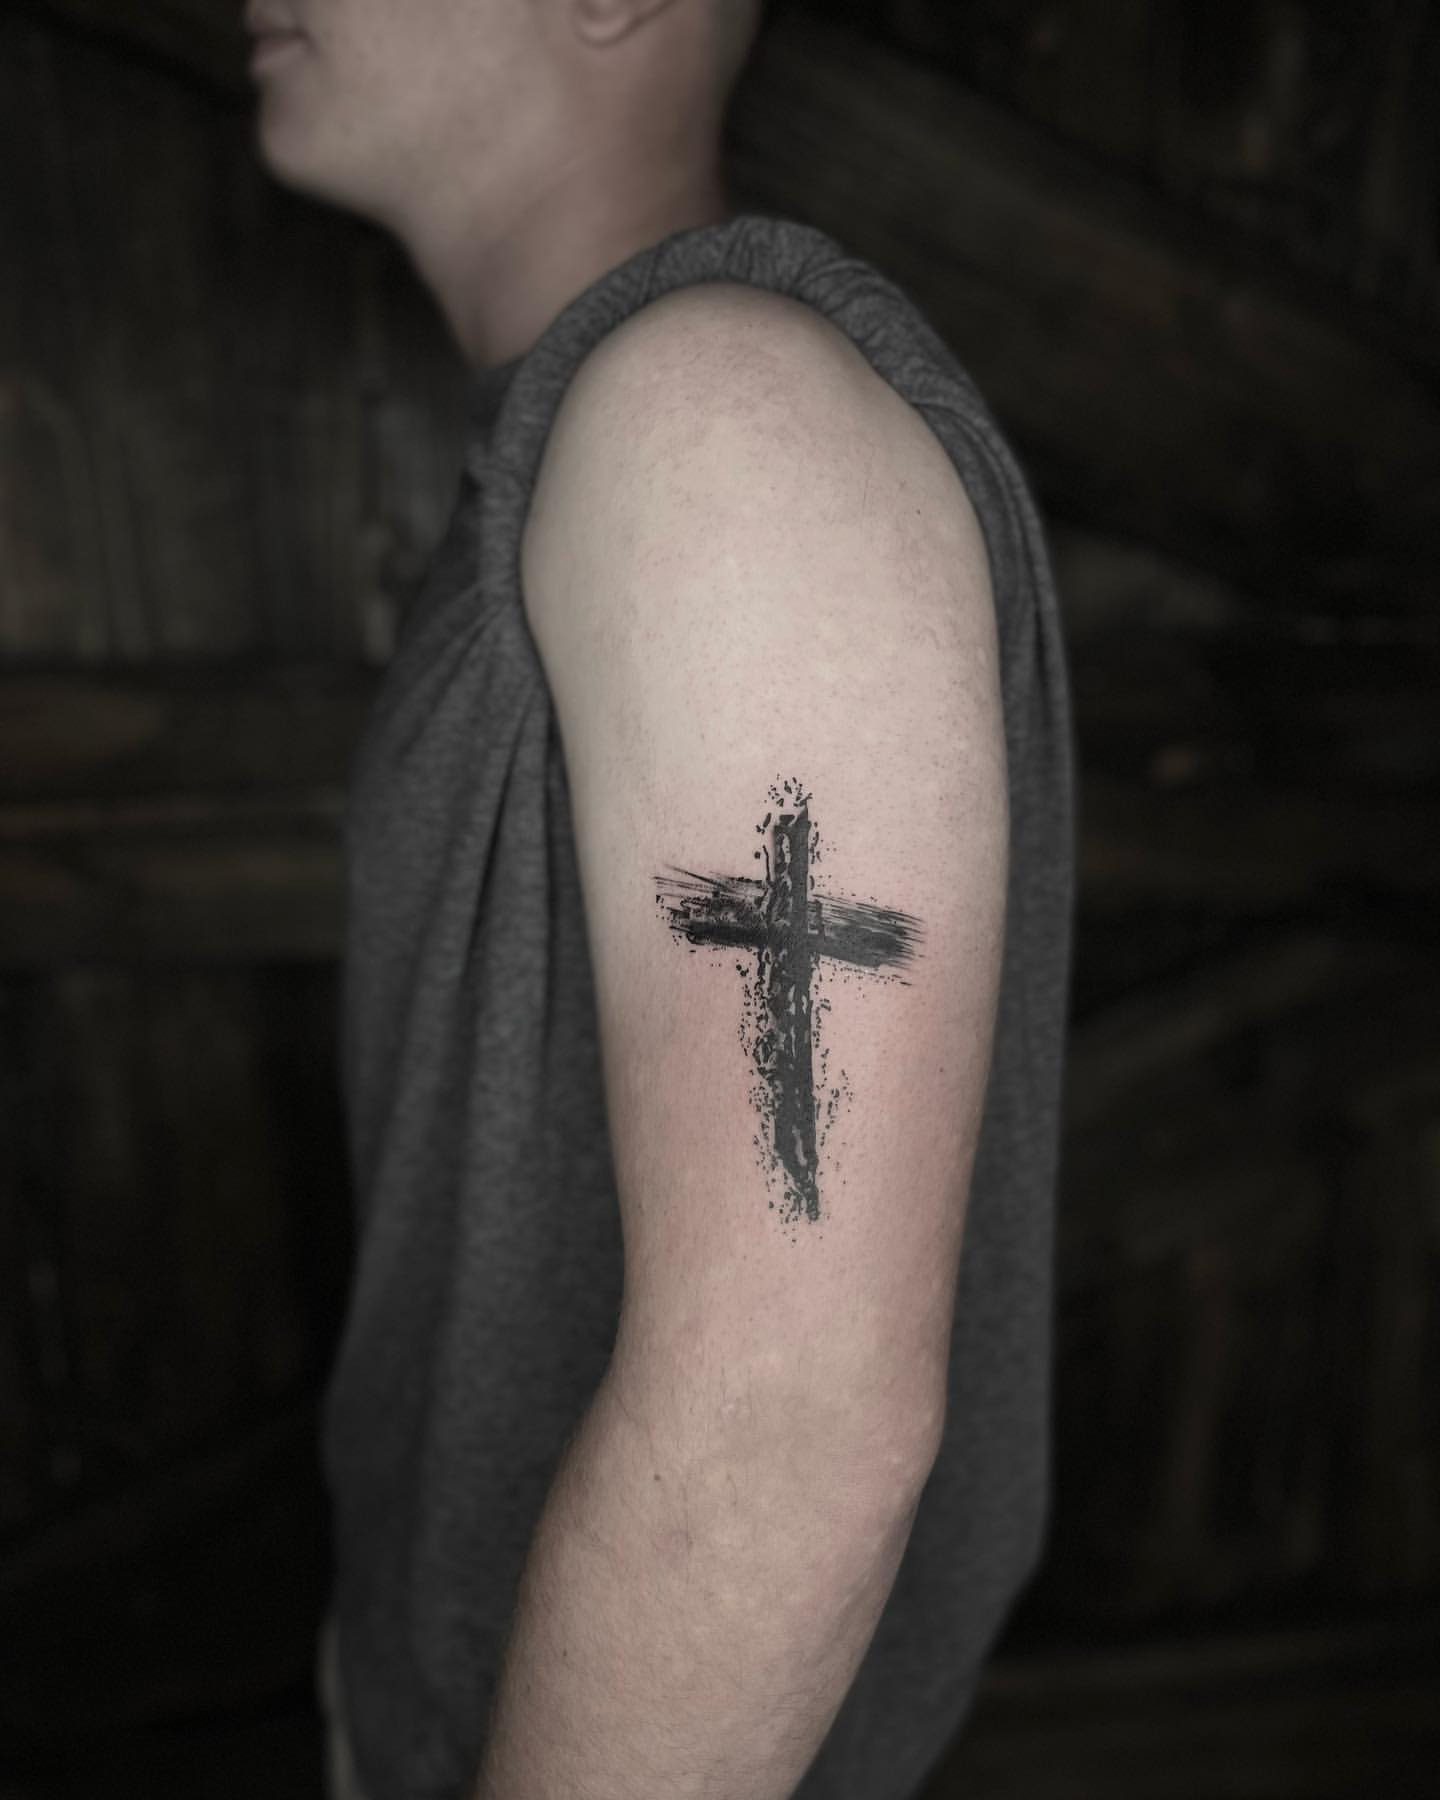 Daddy Om tattoos - Holy Cross and Old School Tattoo done by  @freni_ashok_tattooist @daddy_om_tattoos #crosstattoo #tattoo #tattoos # cross #blackandgreytattoo #ink #tattooart #inked #tattooartist #rosetattoo # tattooed #tattooer #art #armtattoo ...